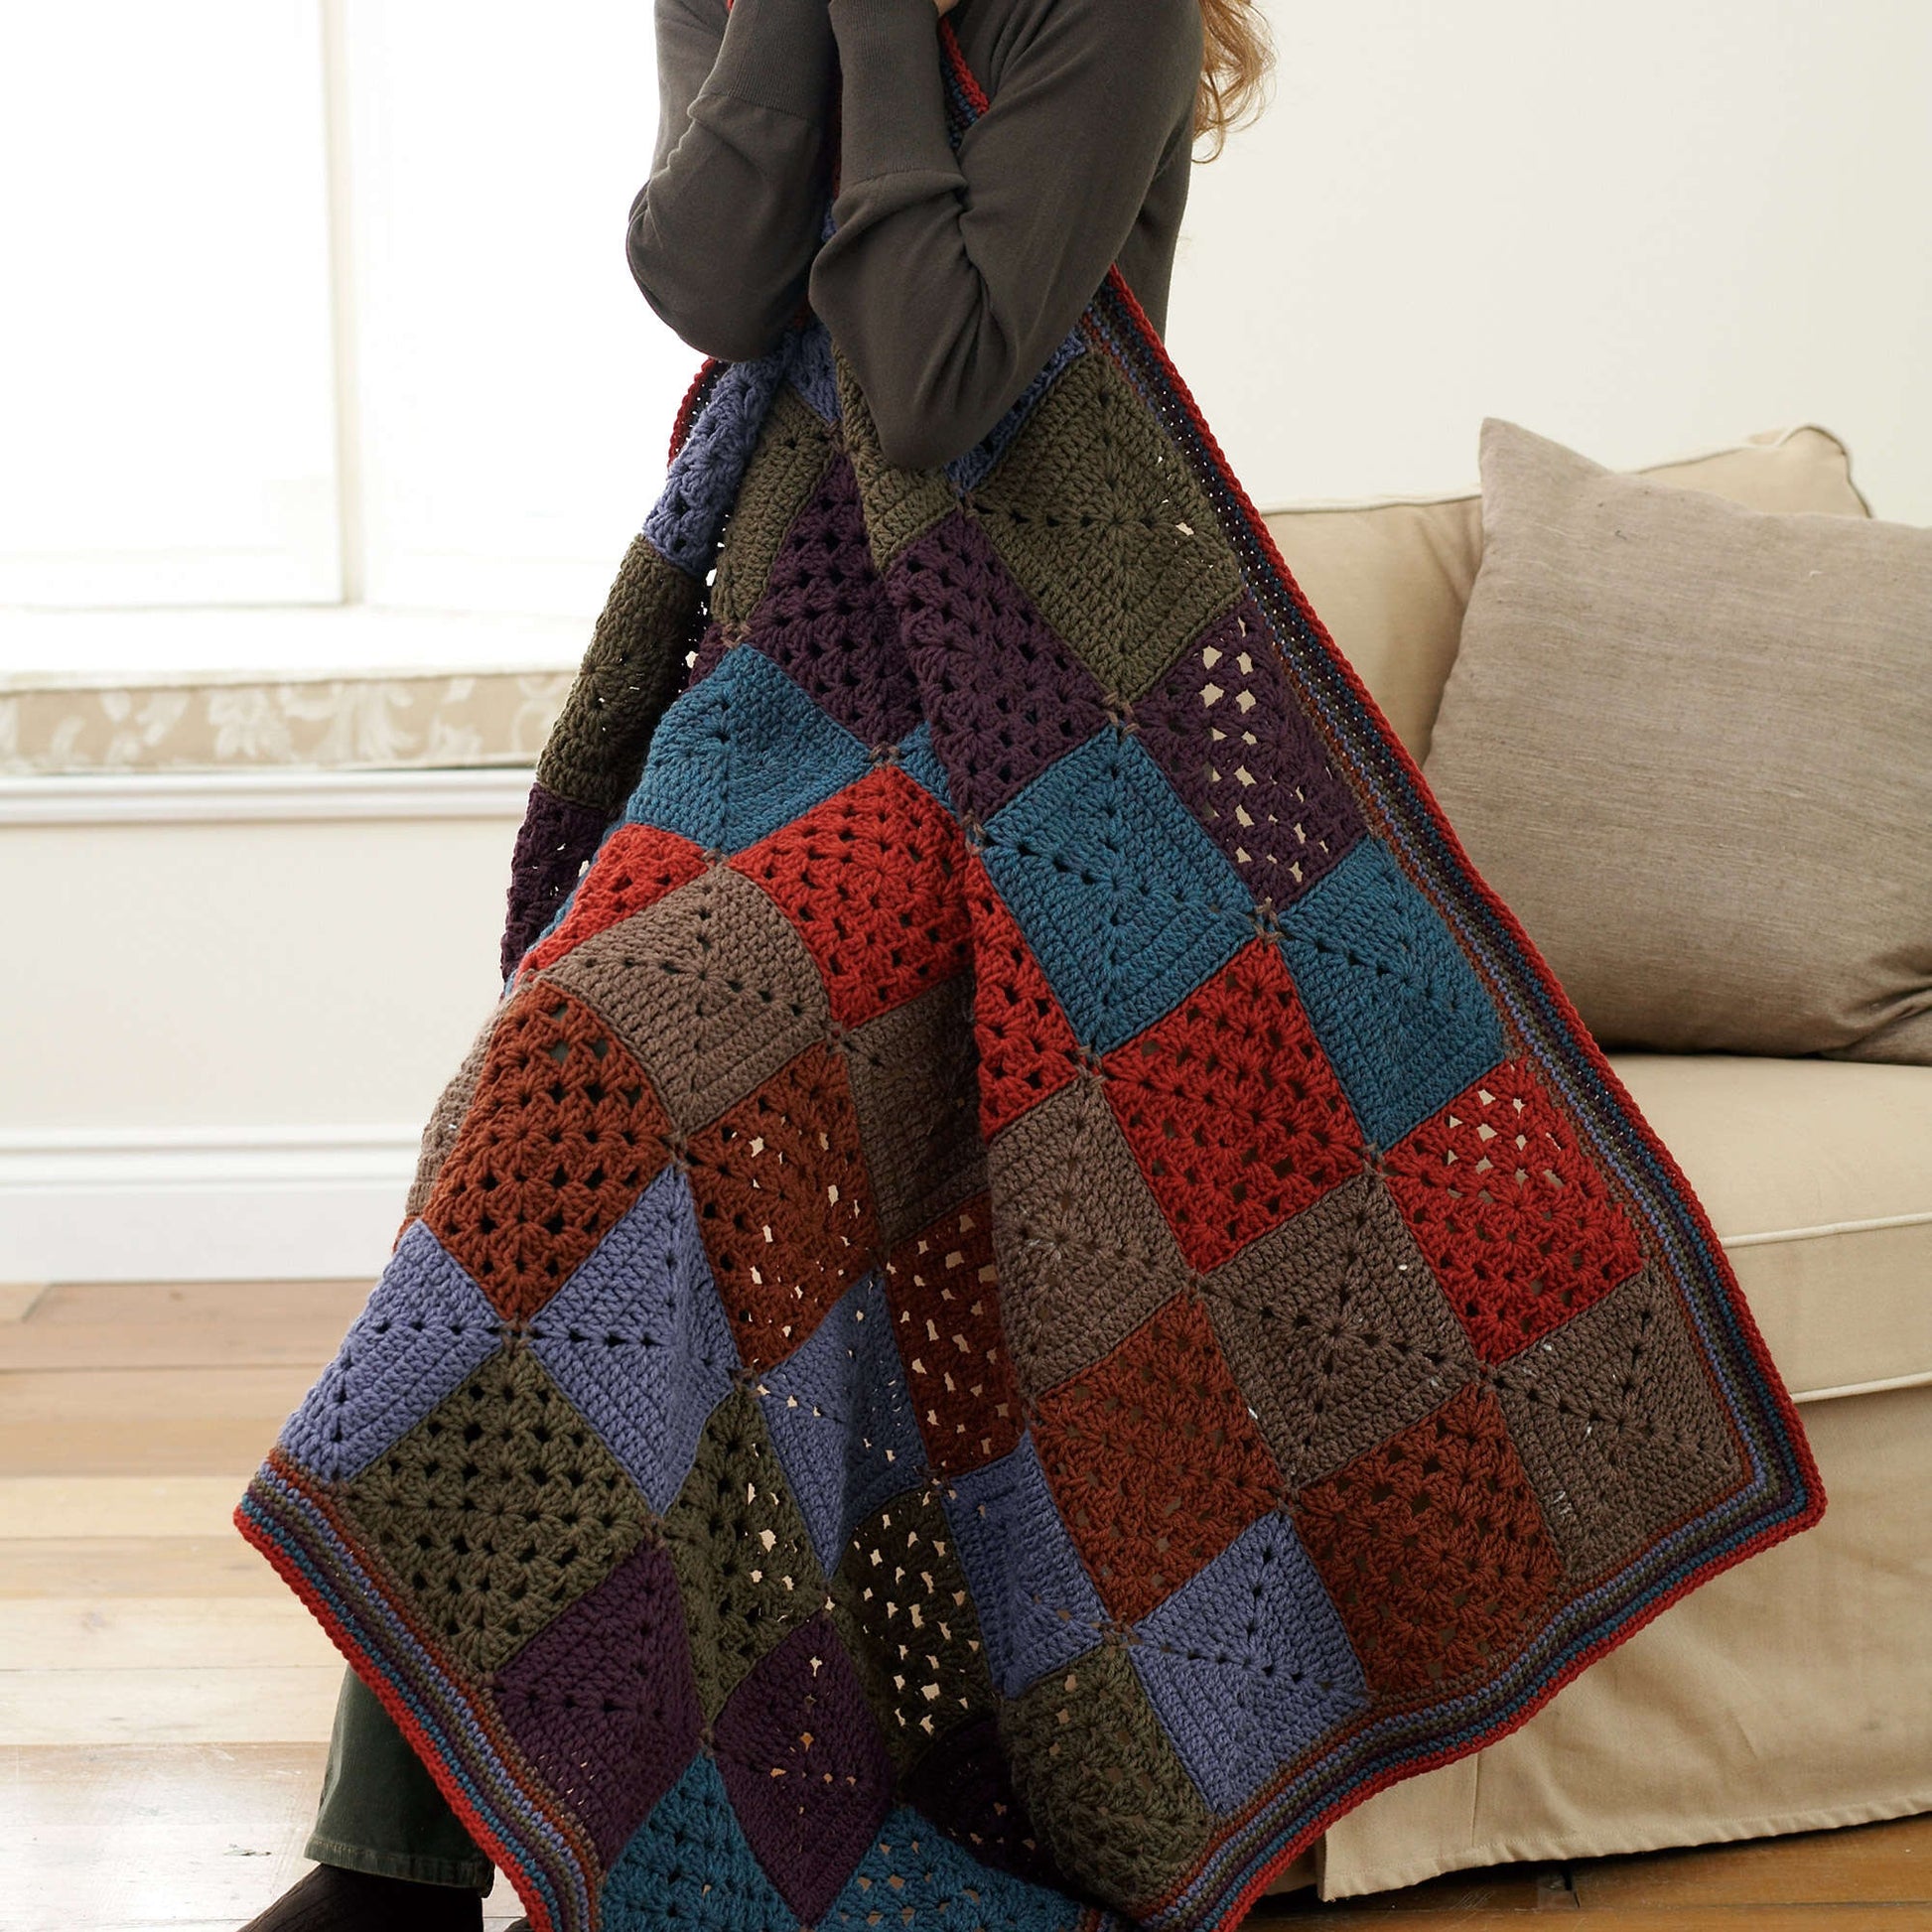 Bernat Granny Afghan Crochet Blanket made in Bernat Super Value yarn